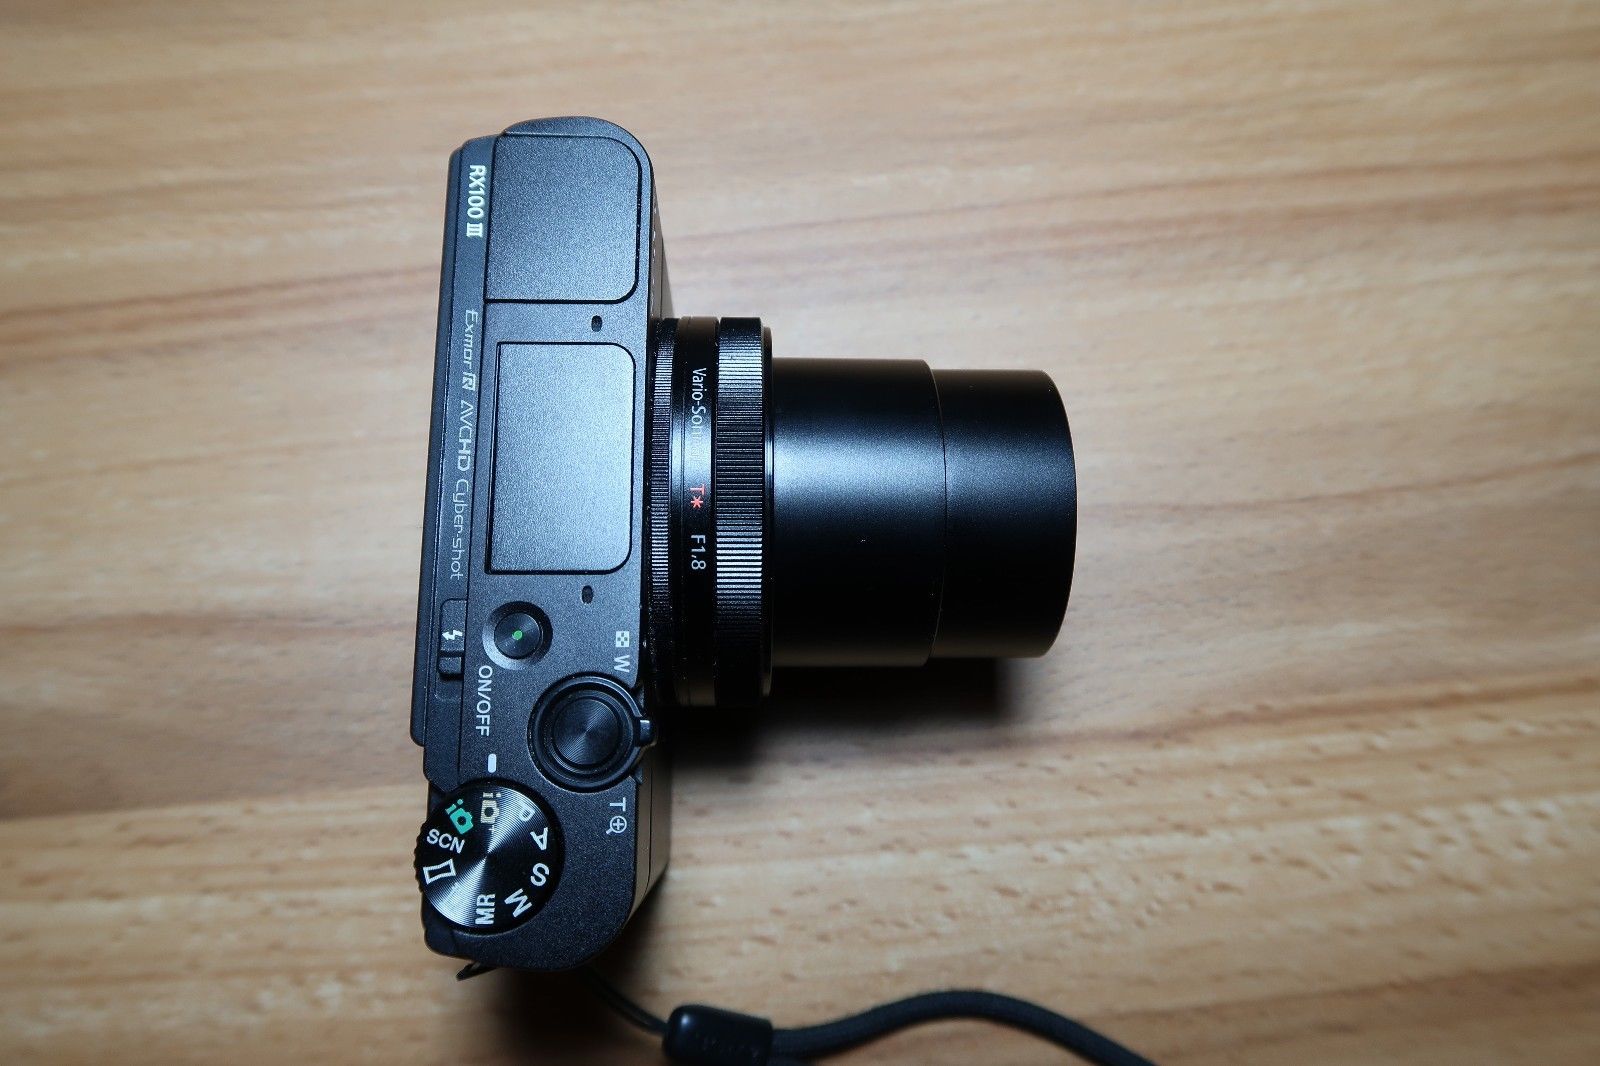 Sony Cyber-shot DSC-RX100M3 20.1 MP Digitalkamera - Schwarz